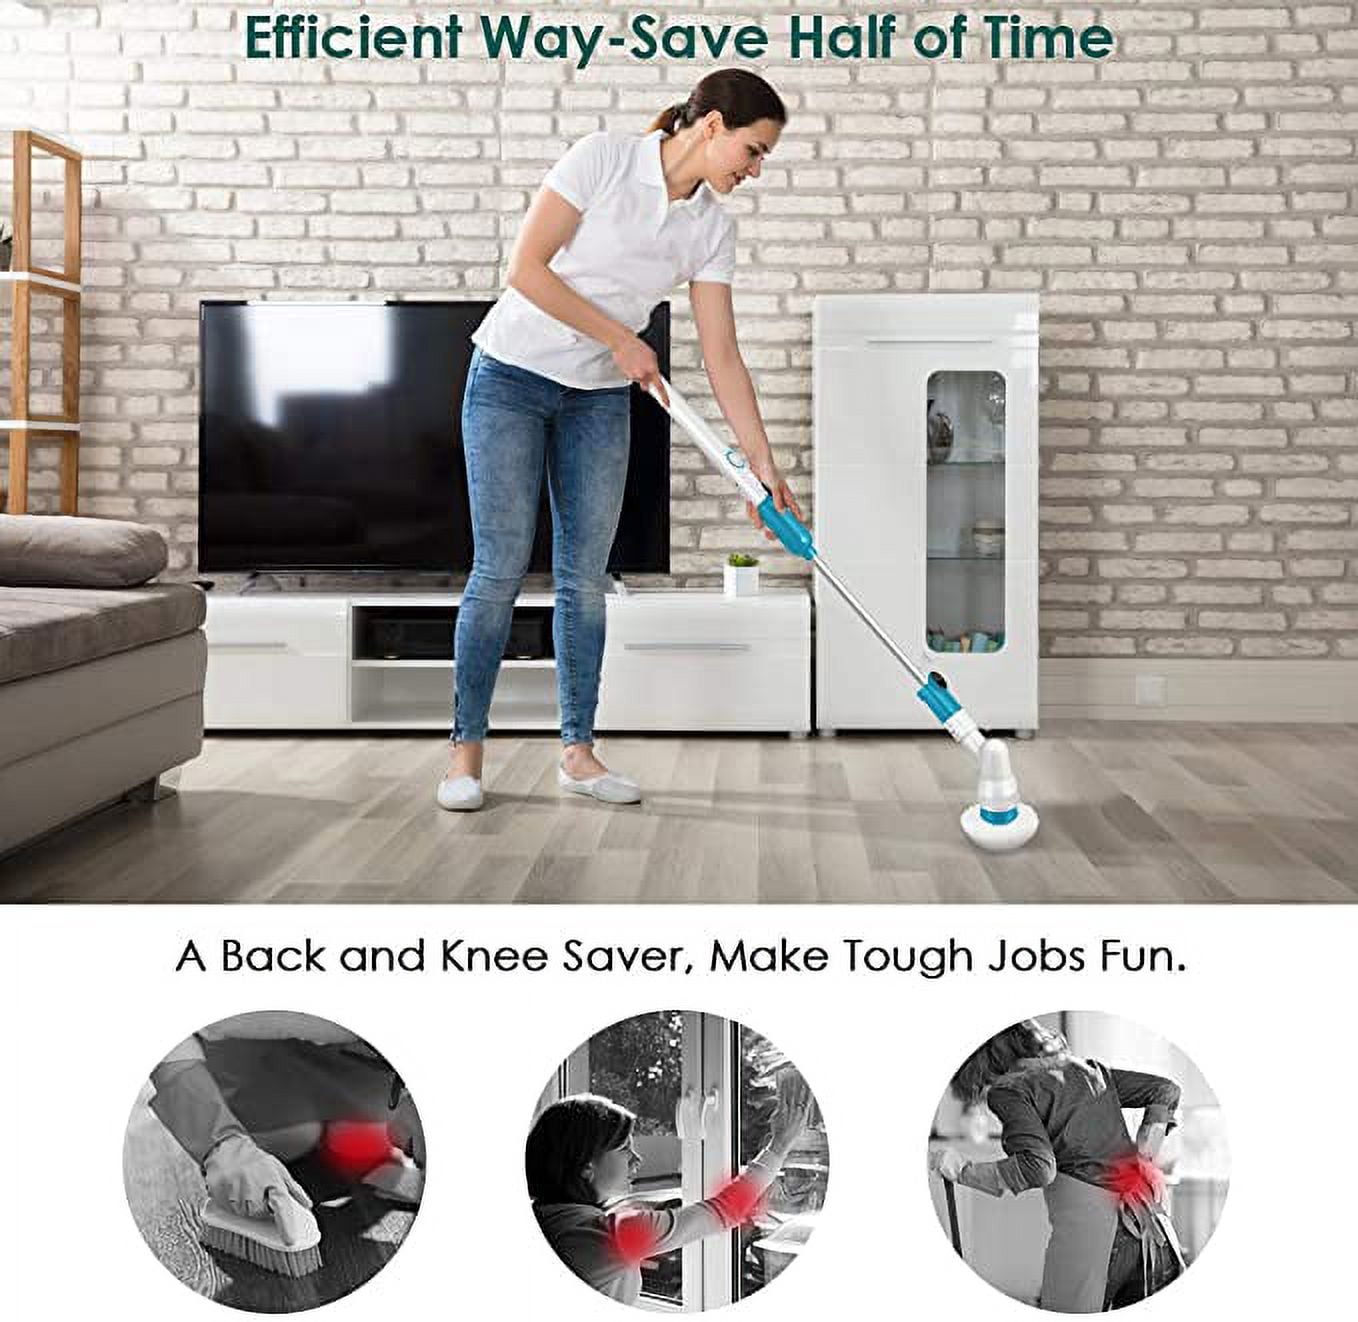 Autrucker Electric mop, electric mop, 360 degree cordless bathroom